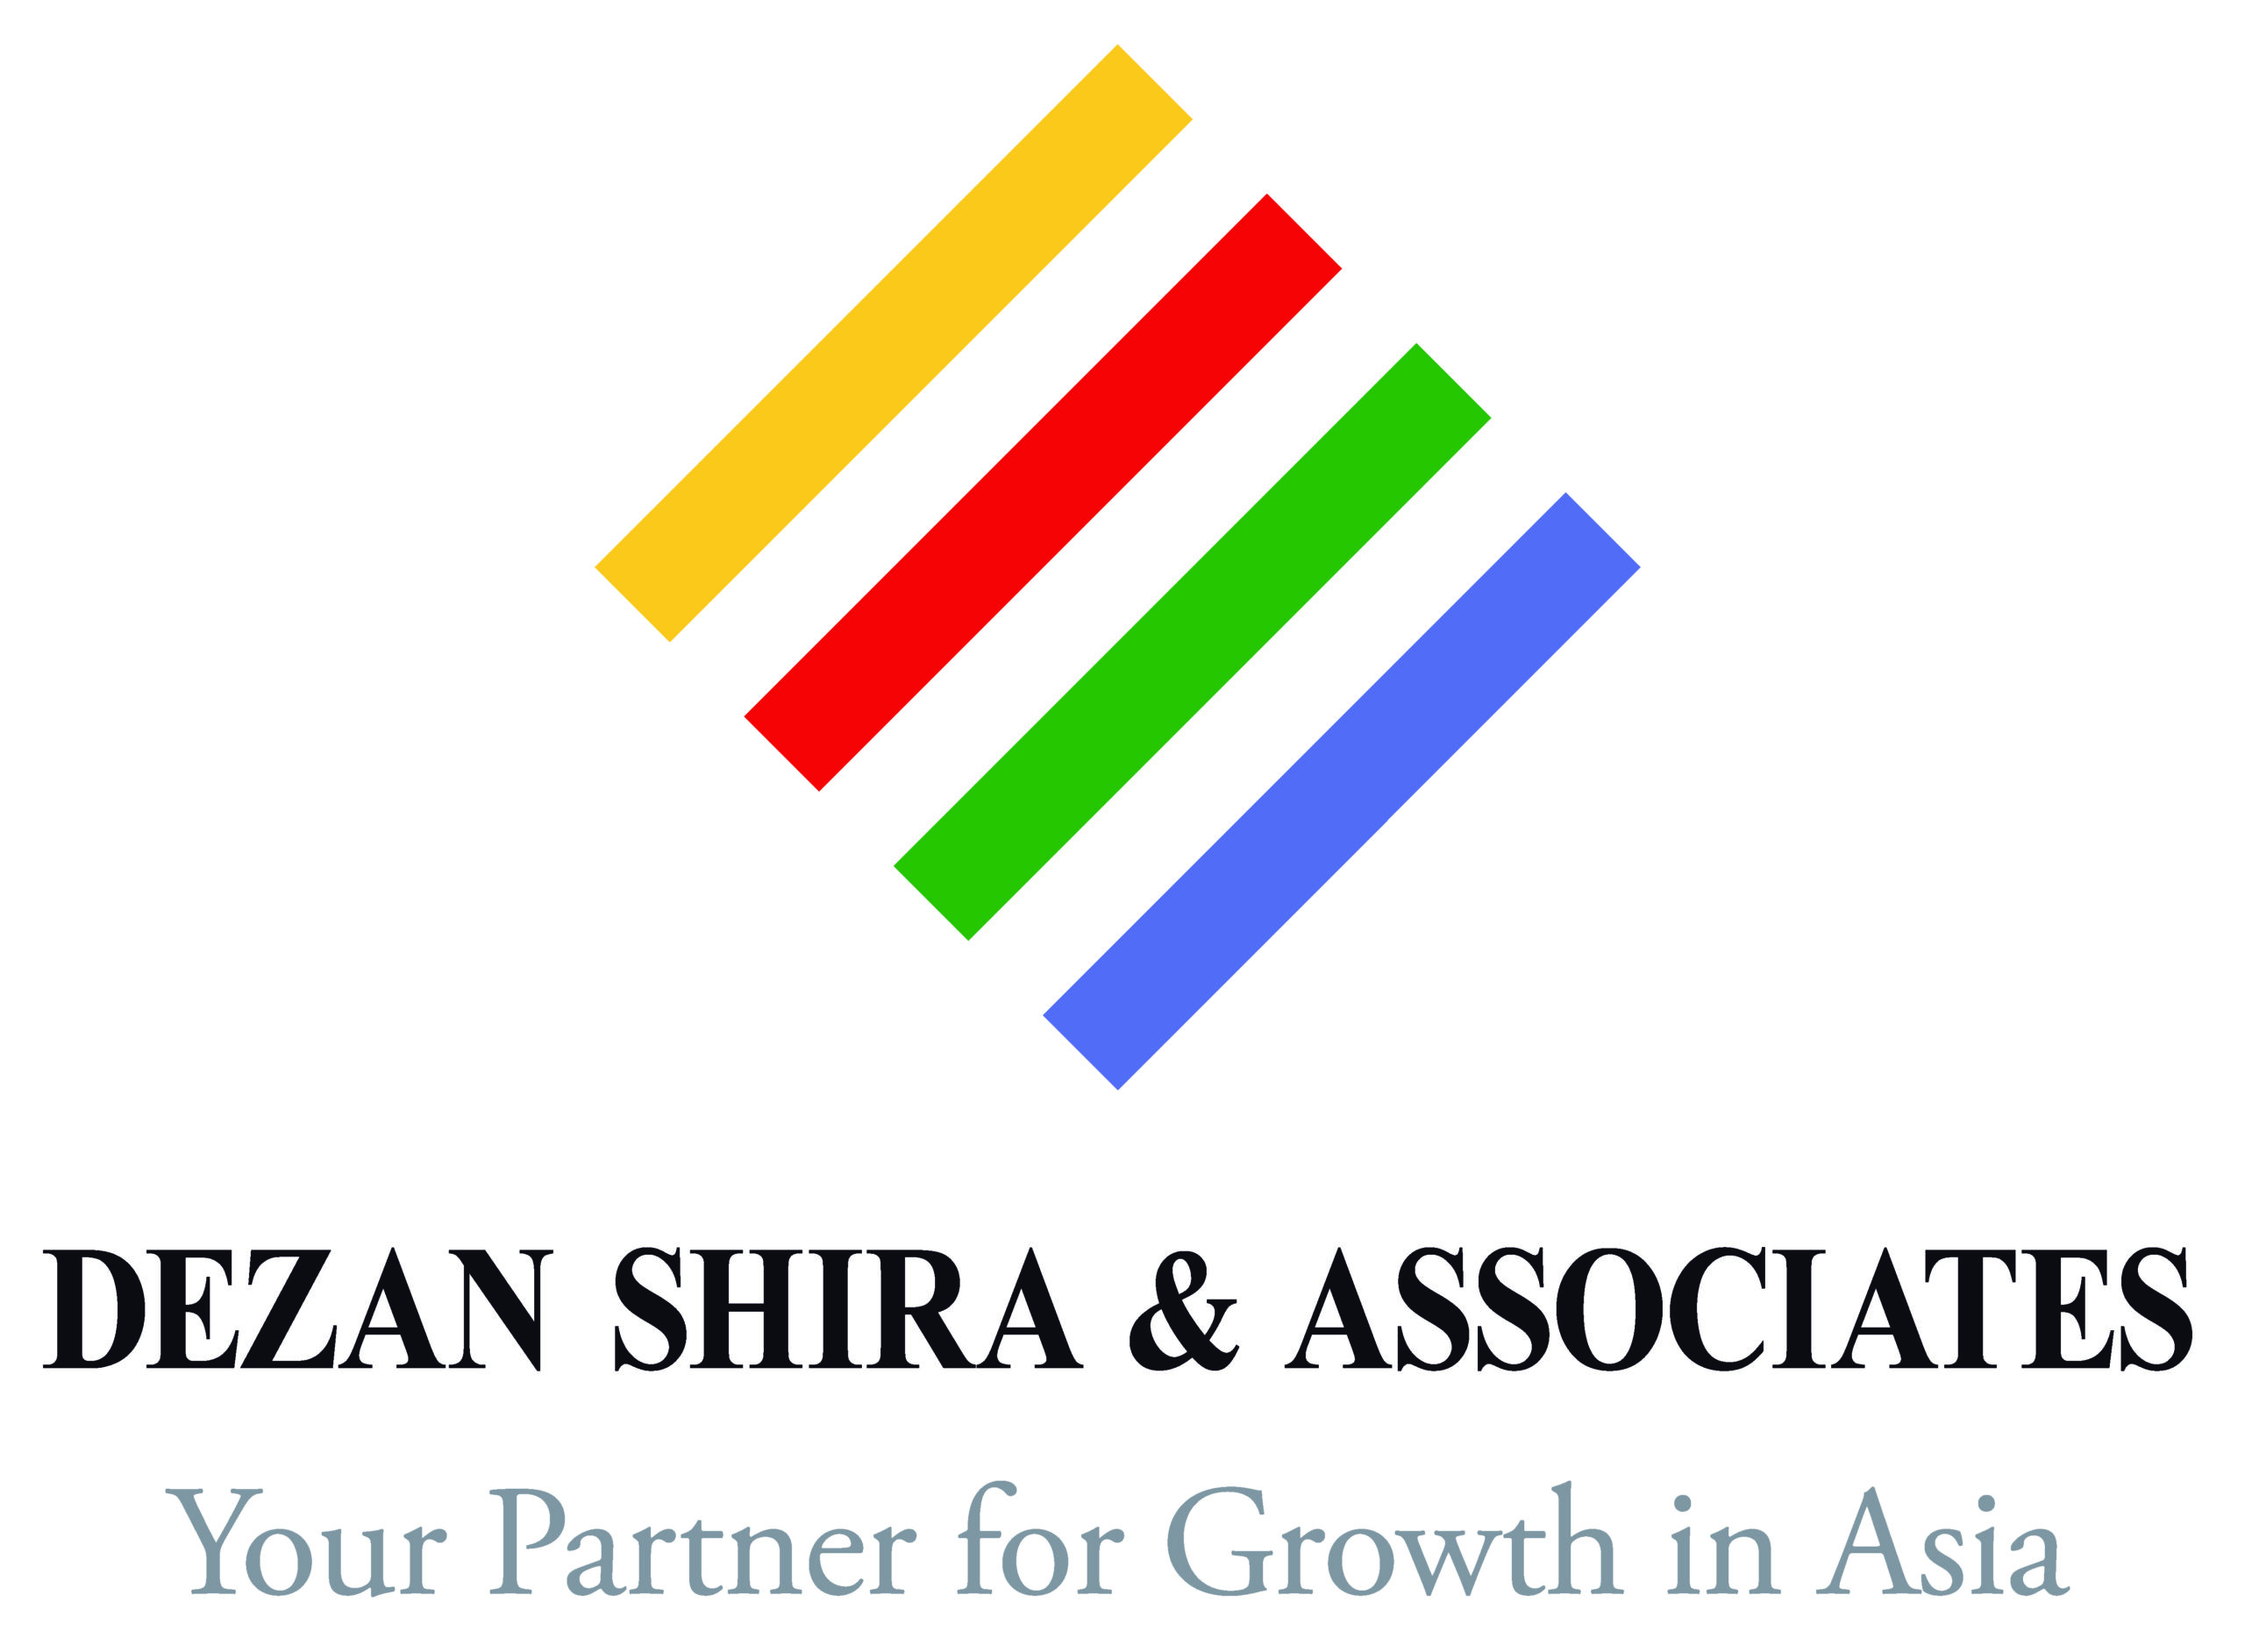 Dezan Shira & Associates